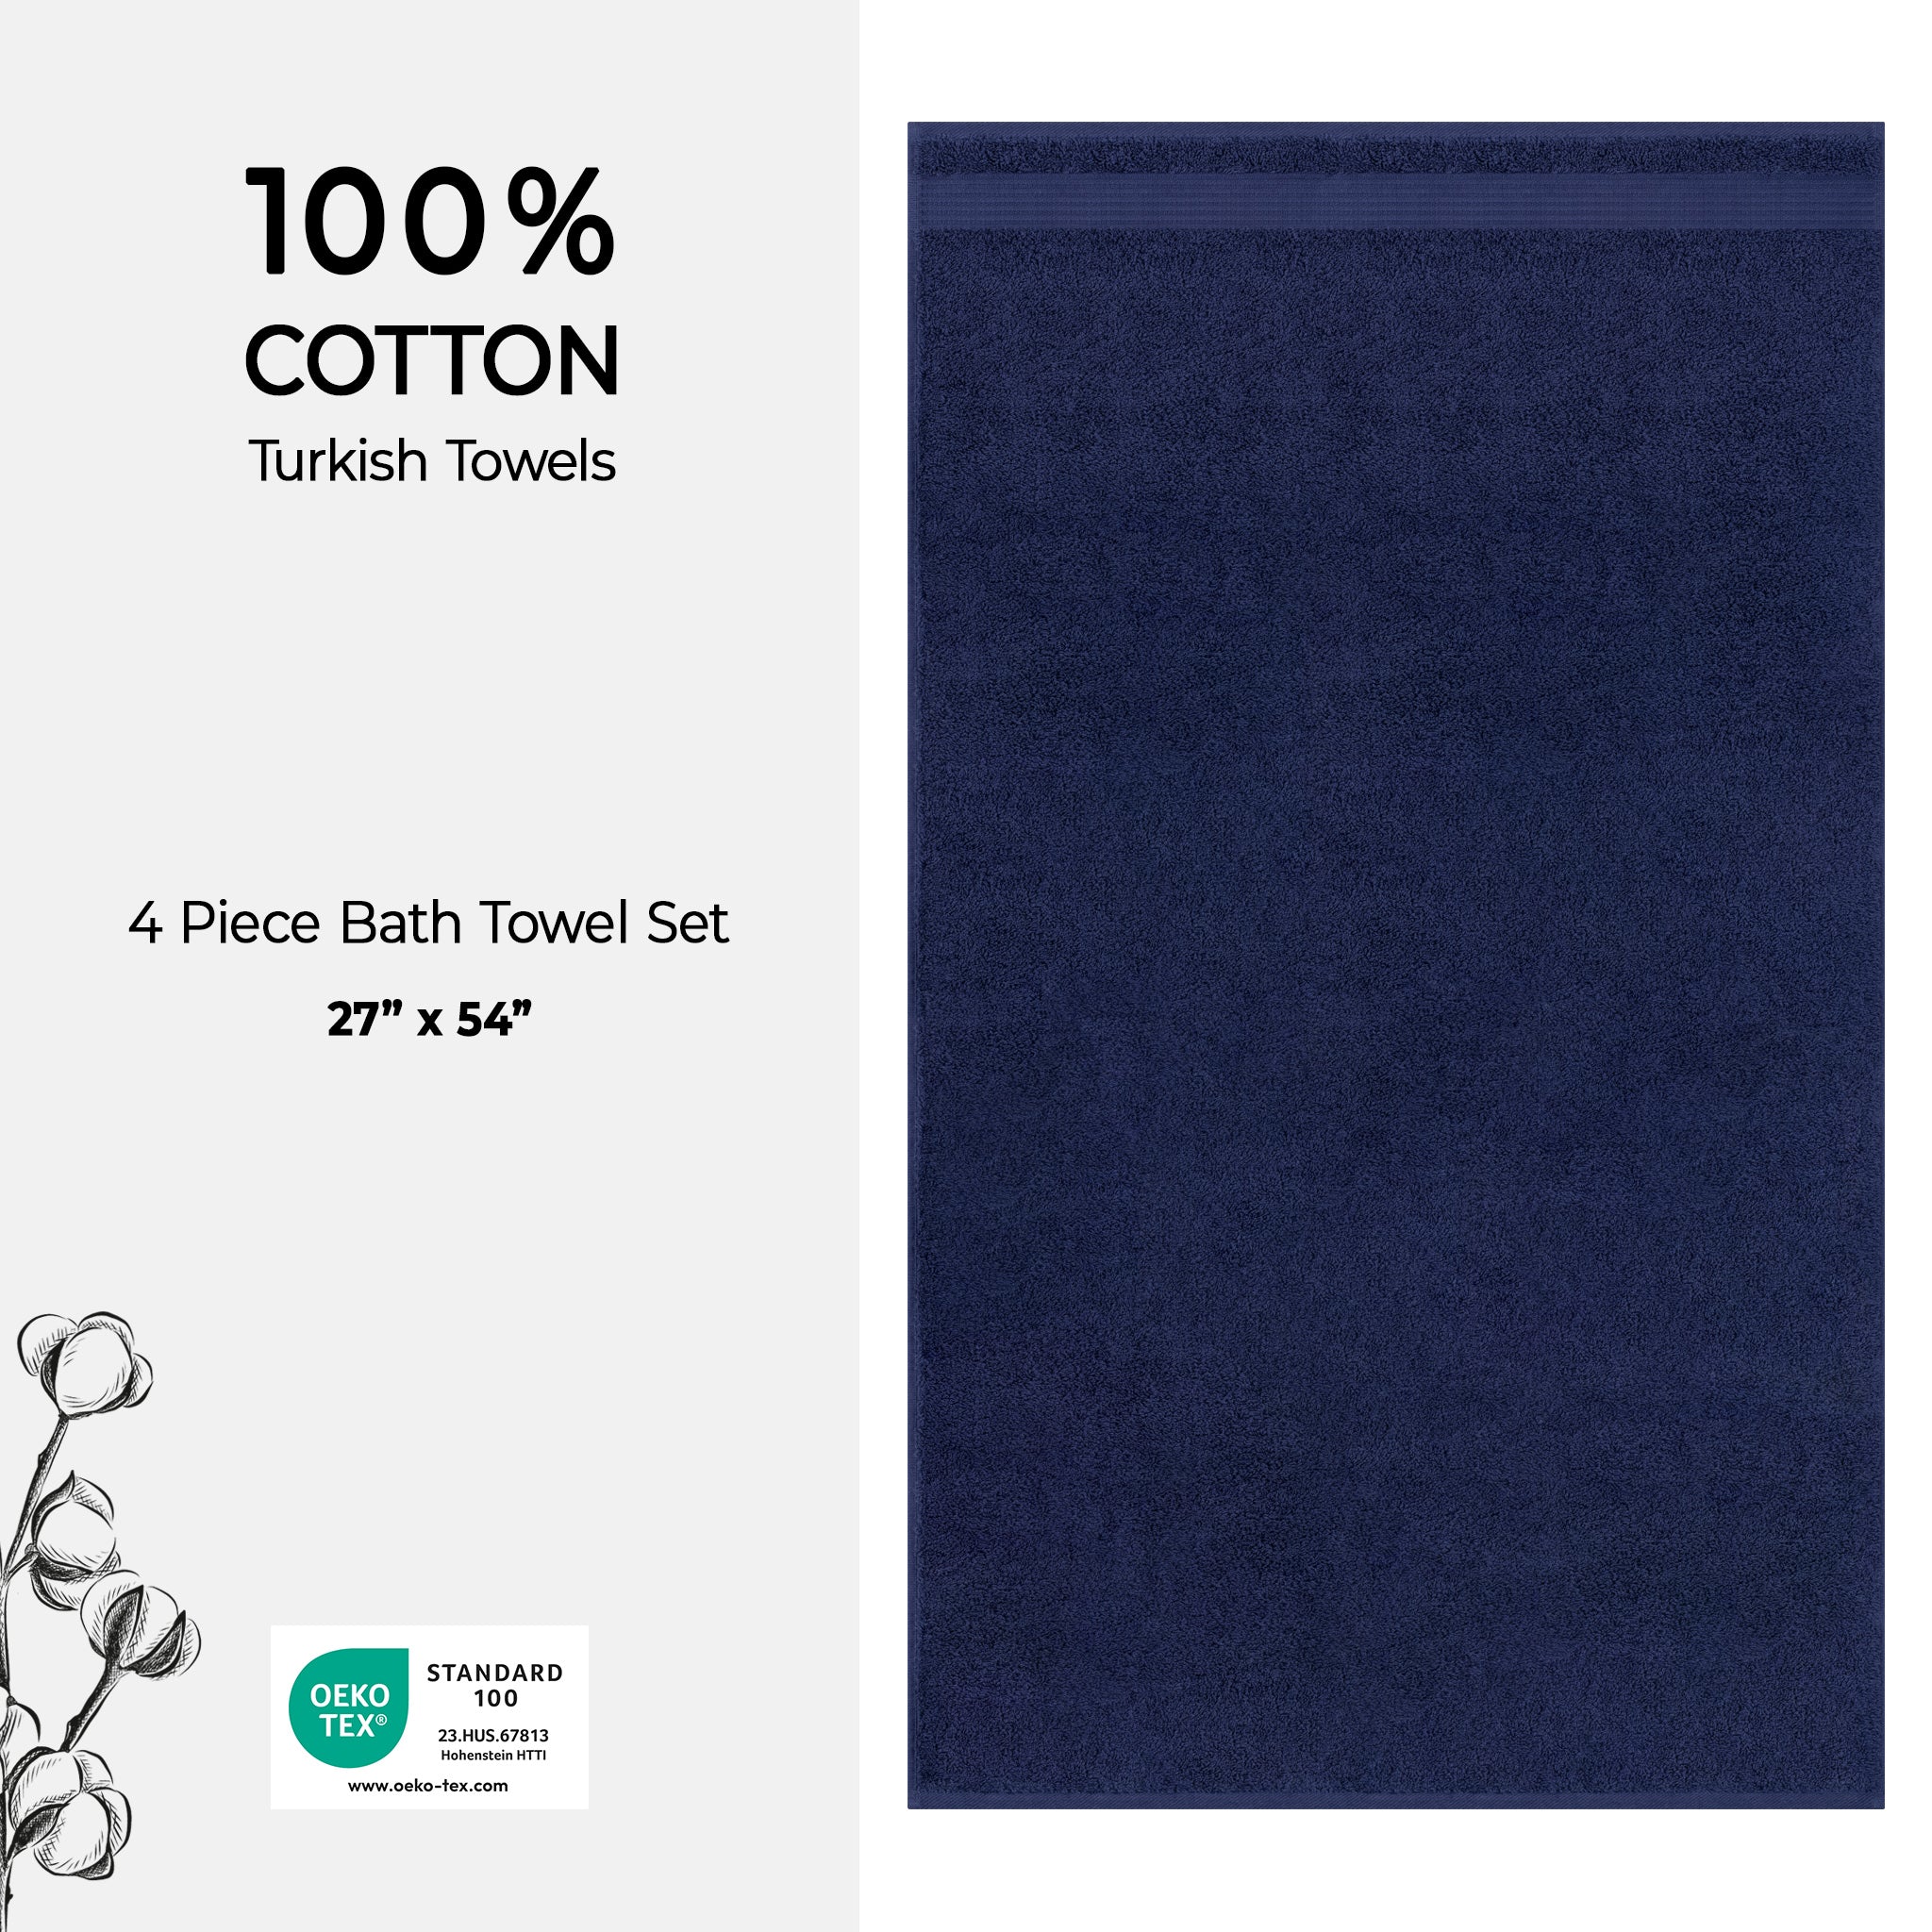 American Soft Linen Bekos 100% Cotton Turkish Towels, 4 Piece Bath Towel Set -navy-blue-04